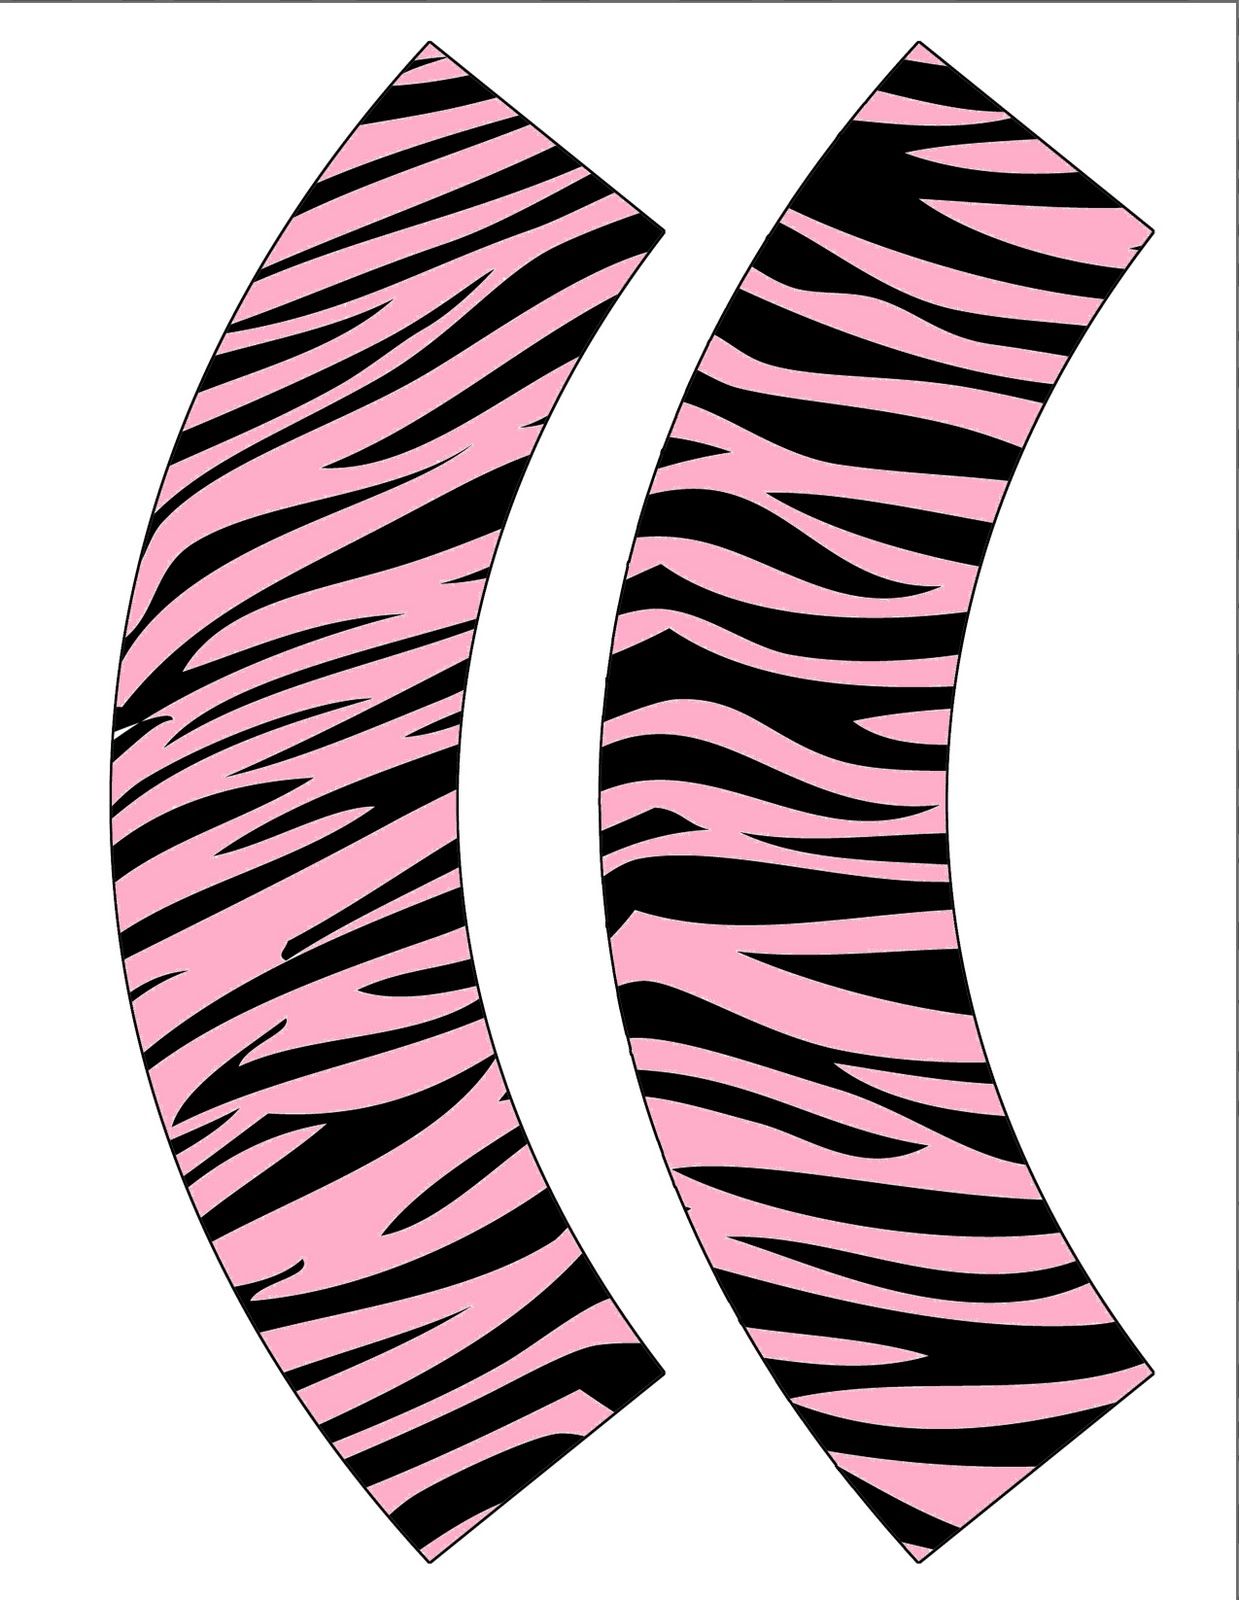 pink zebra print desktop wallpaper - www.